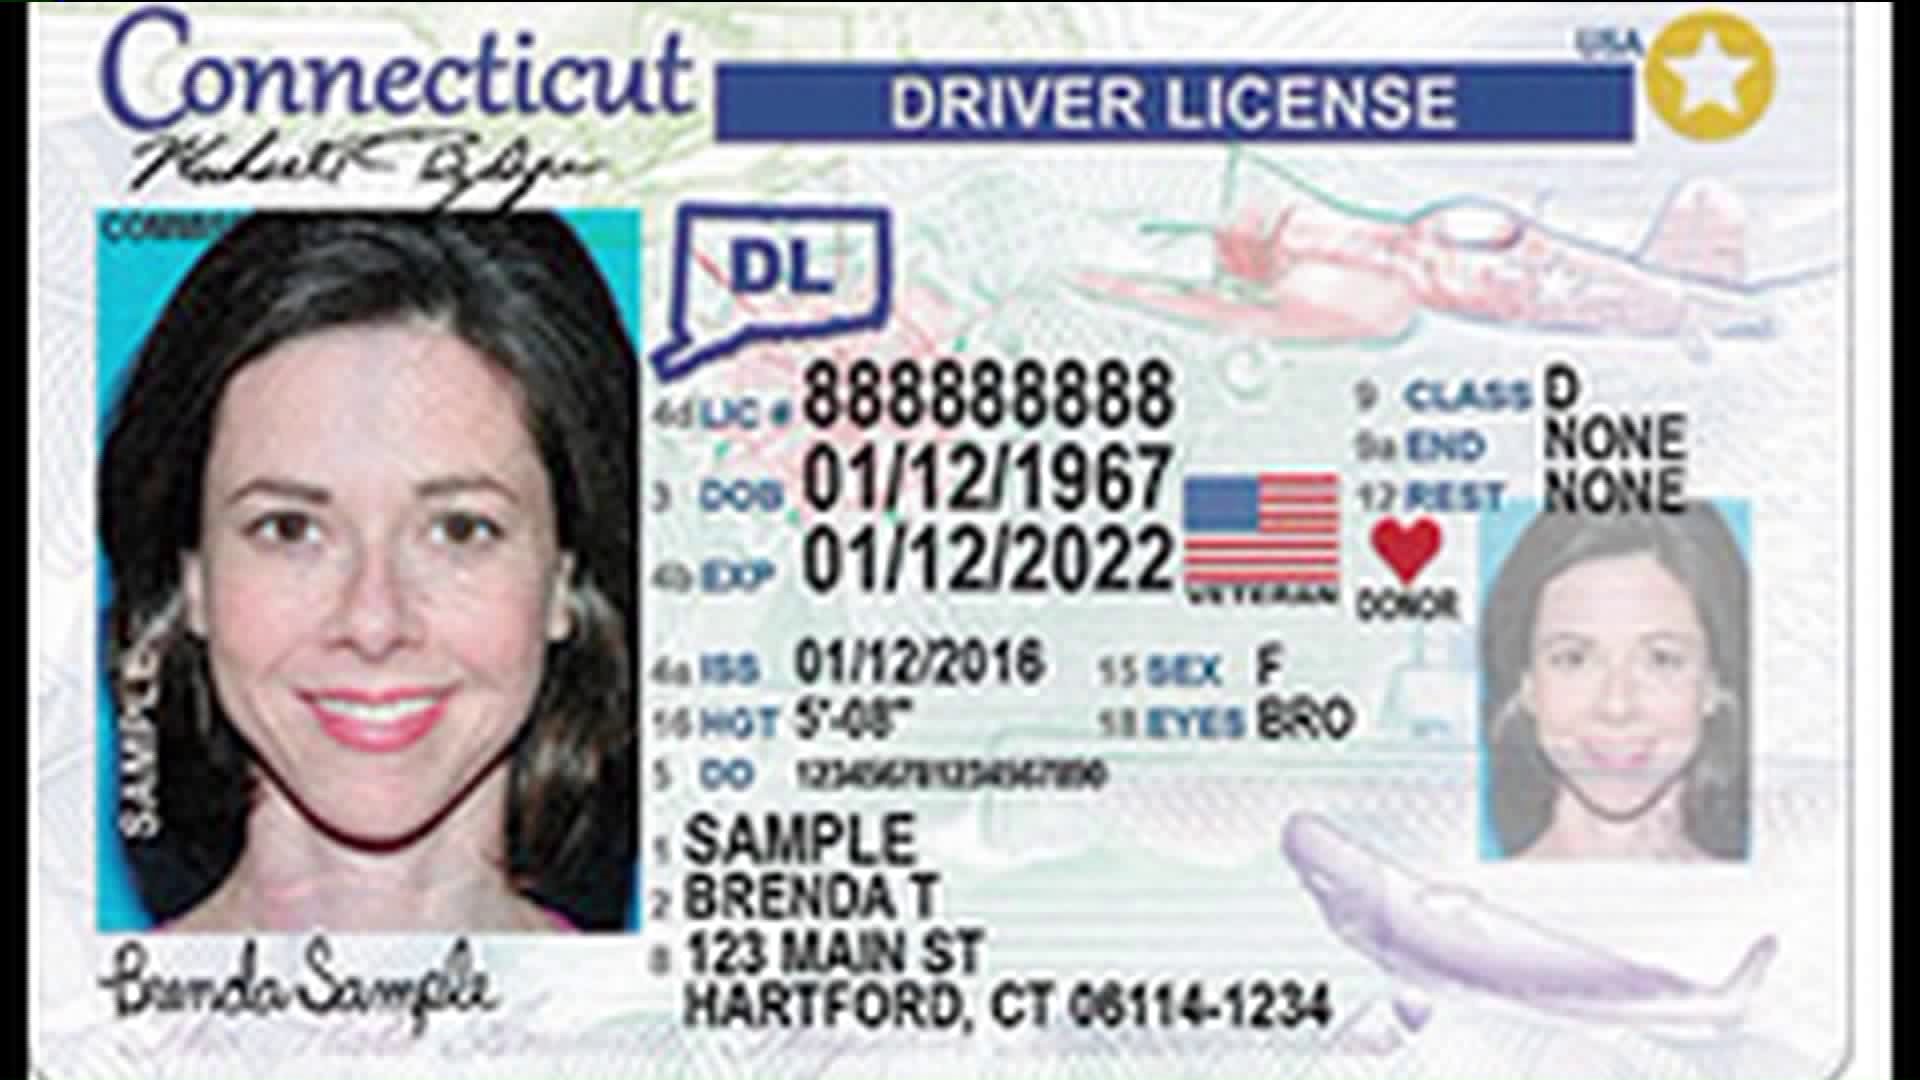 dmv duplicate license in new orleans